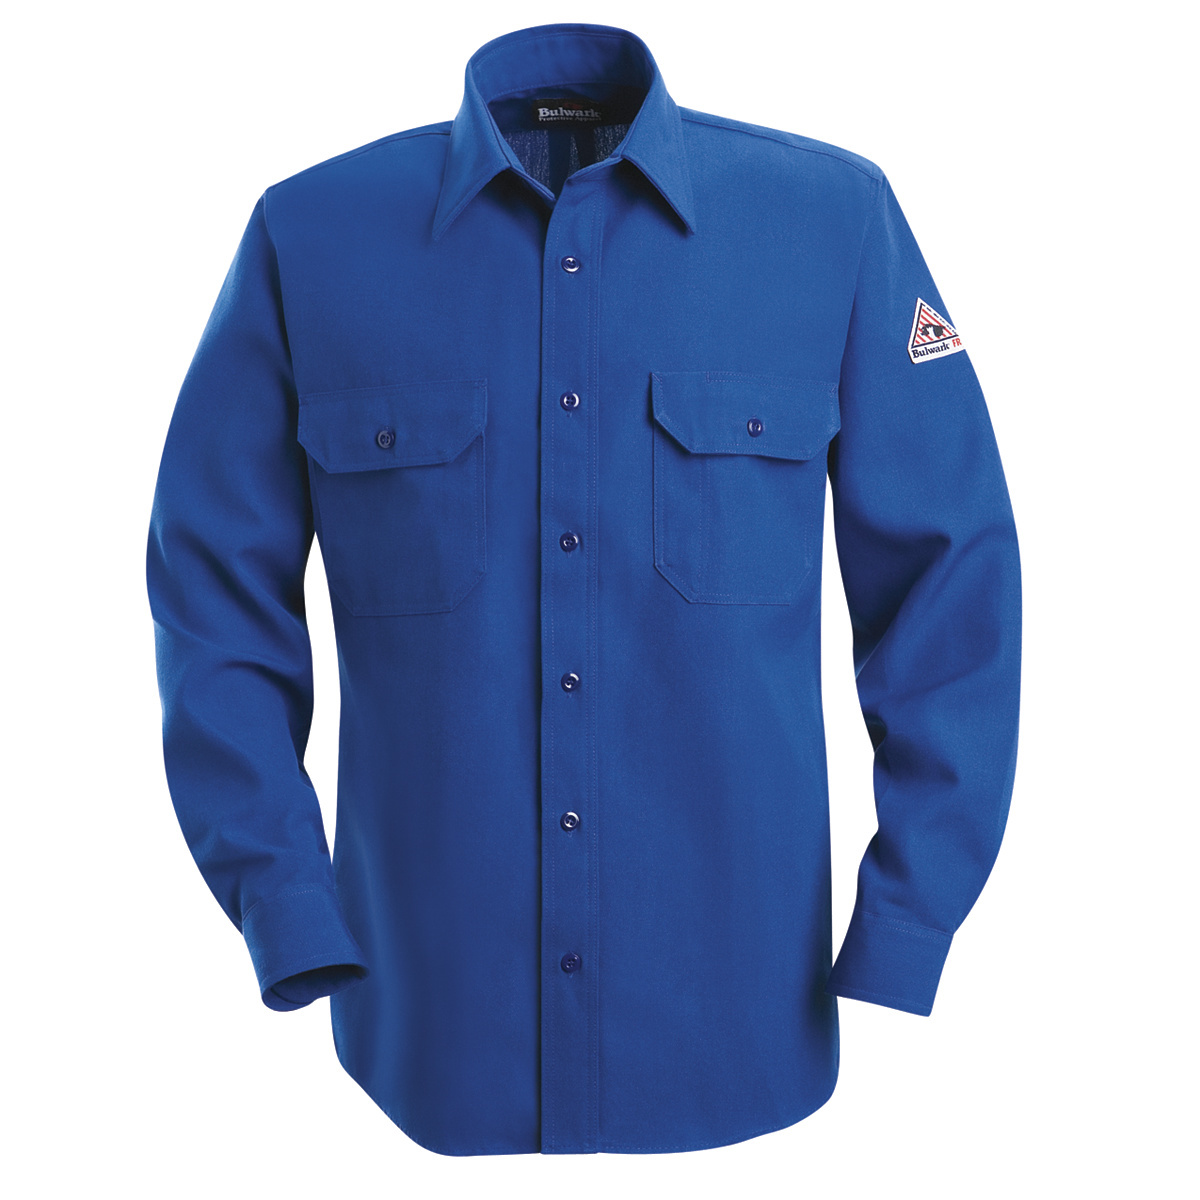 Bulwark® X-Large Tall Royal Blue Nomex® IIIA/Nomex® Aramid/Kevlar® Aramid Flame Resistant Uniform Shirt With Button Front Closur